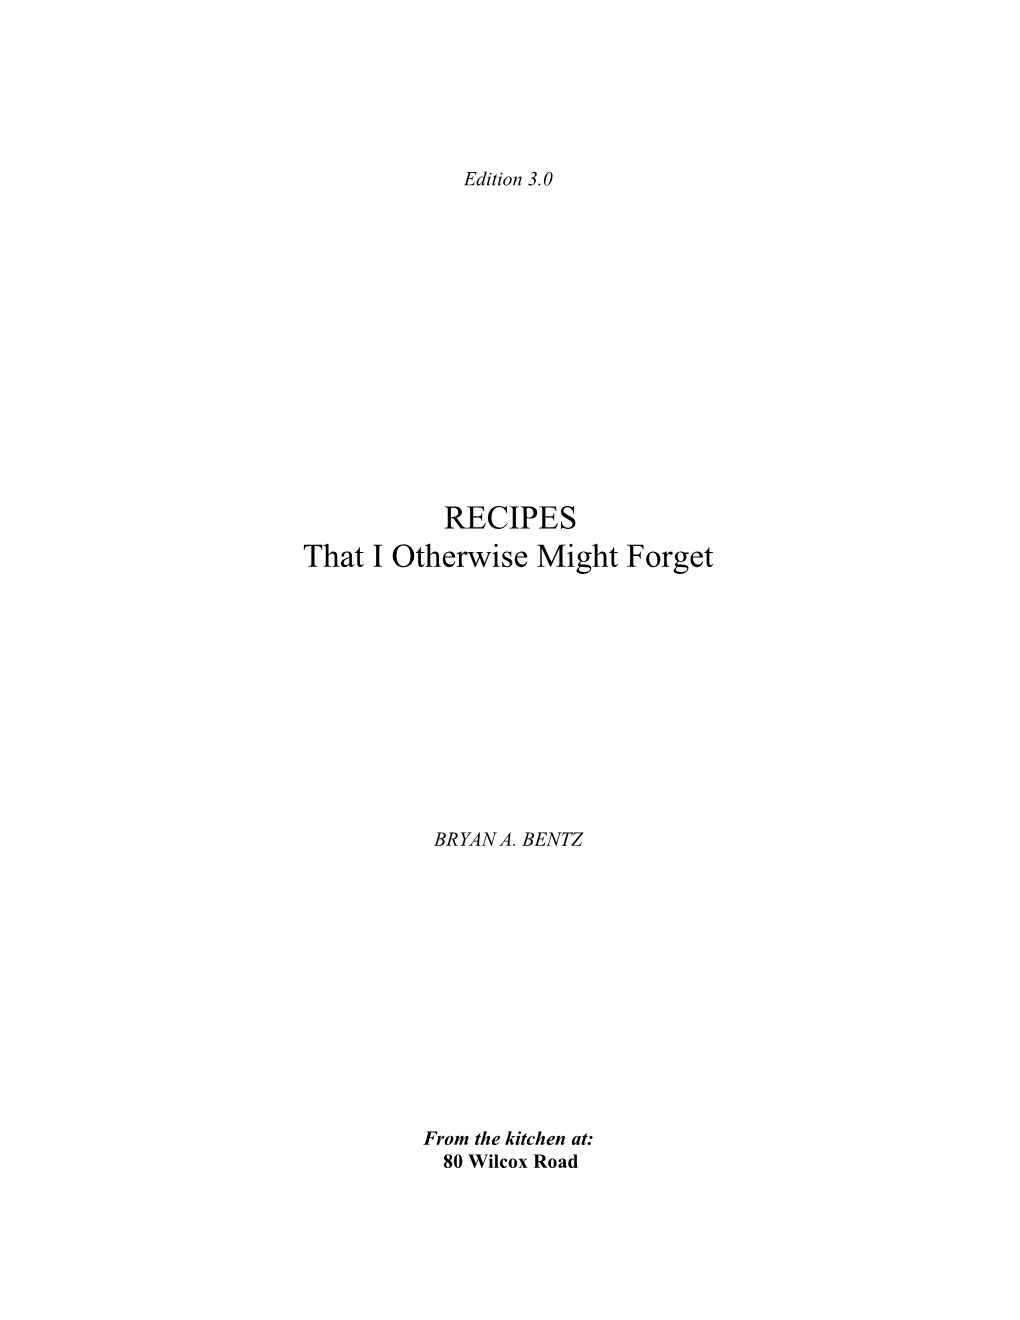 Bryan Bentz Recipes Section: 1